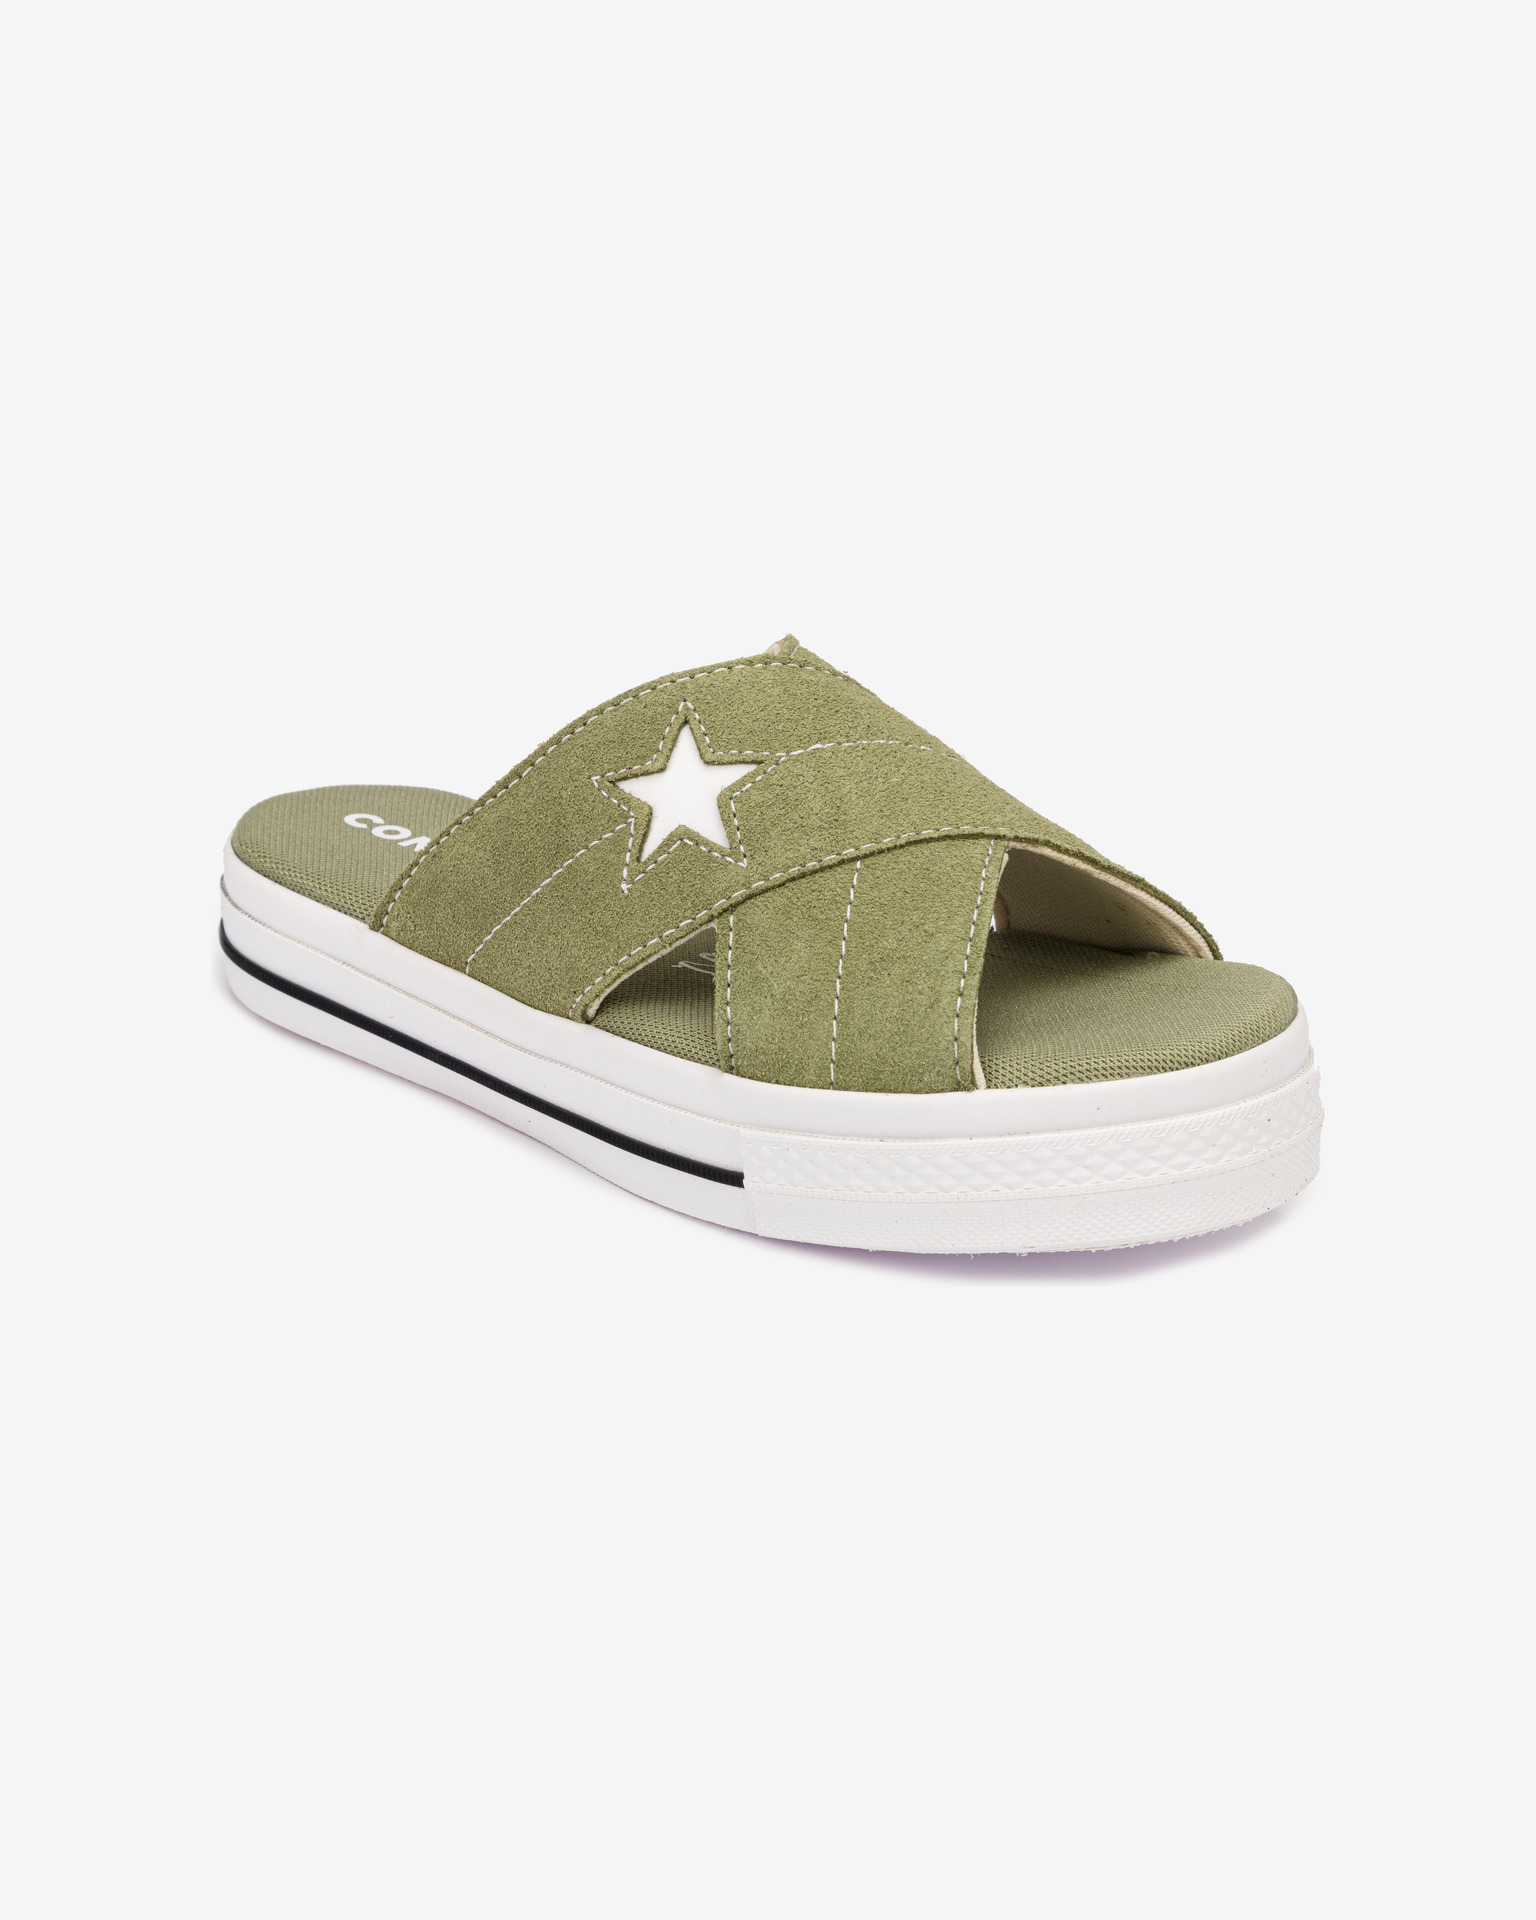 converse one star slipper